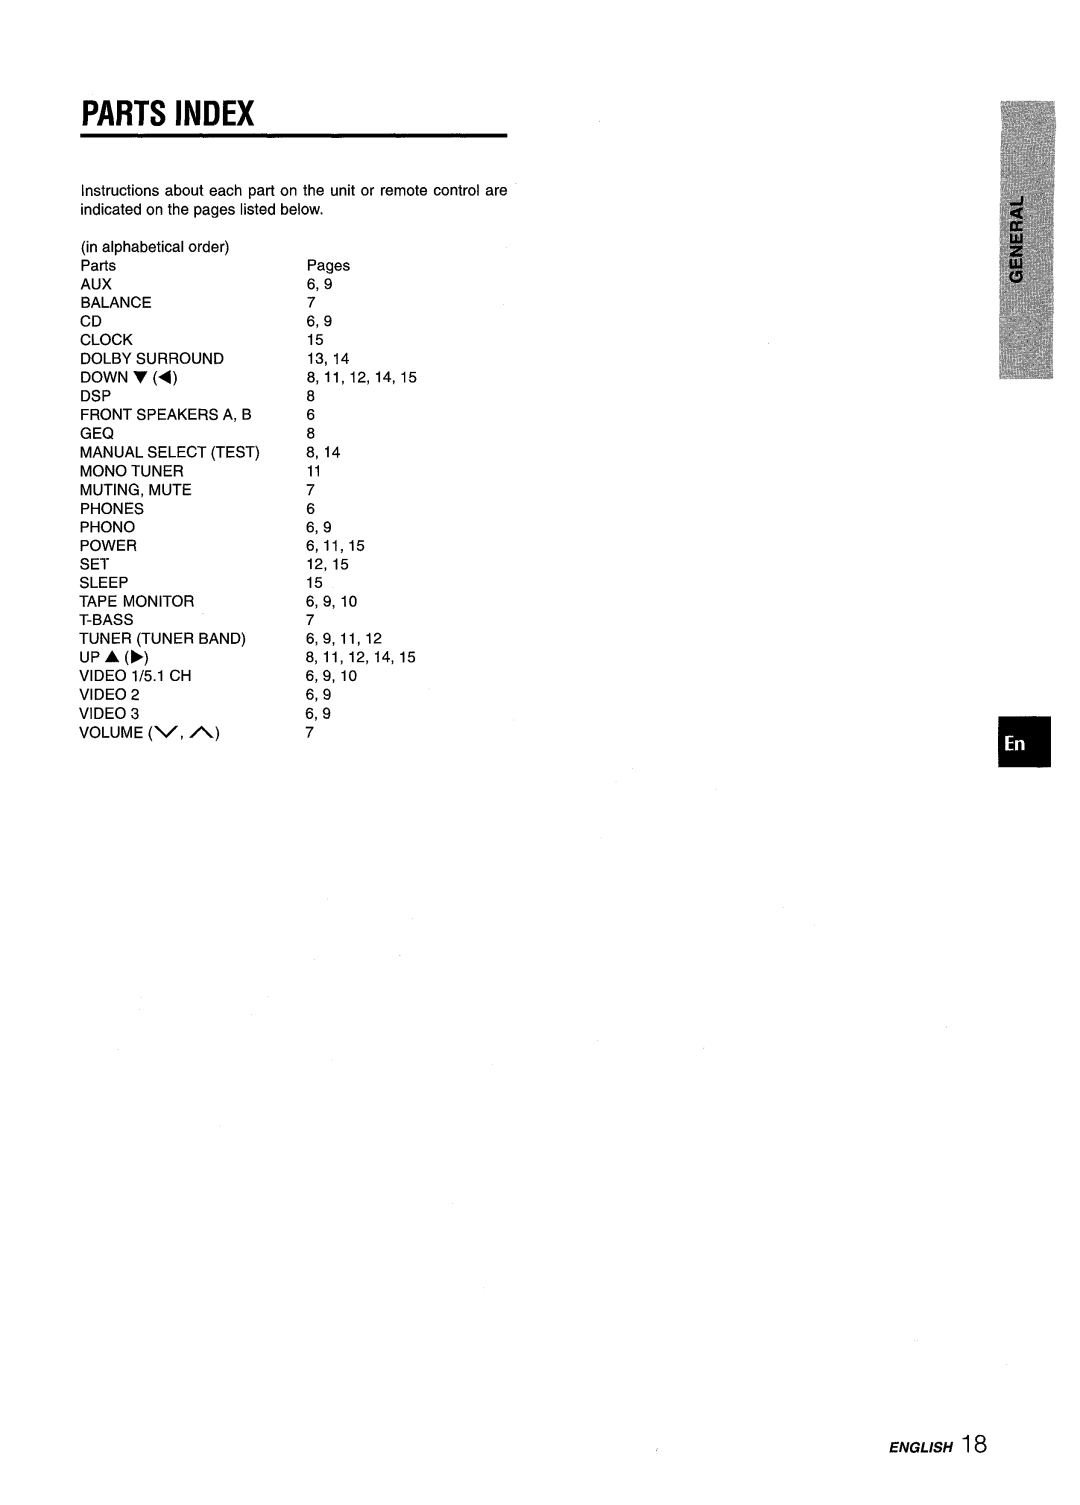 Aiwa AV-D25 manual Parts Index, ENGLISH18 